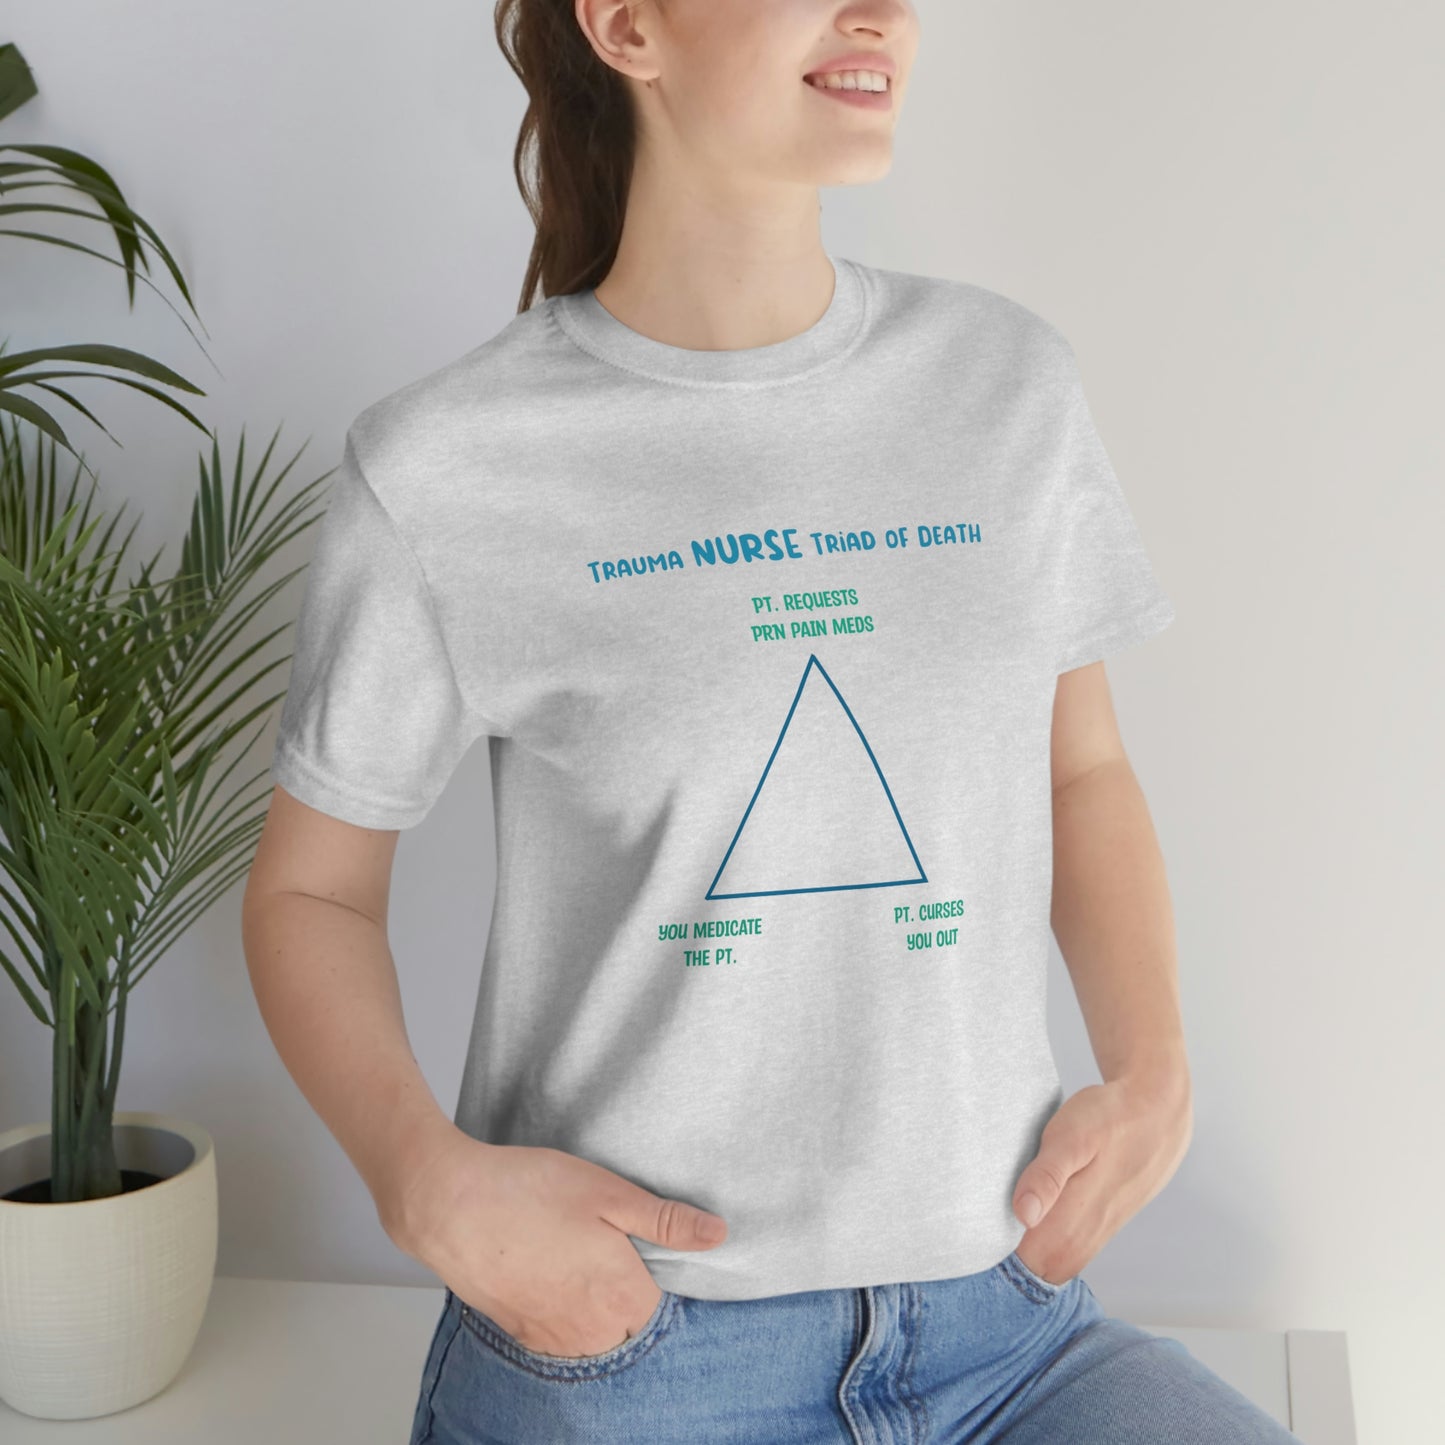 Trauma Nurse Triad of Death Funny Nurse Shirt for Trauma Nurses! Nurse Gift! Nurse Preceptor Gift! Unisex Jersey Short Sleeve Tee